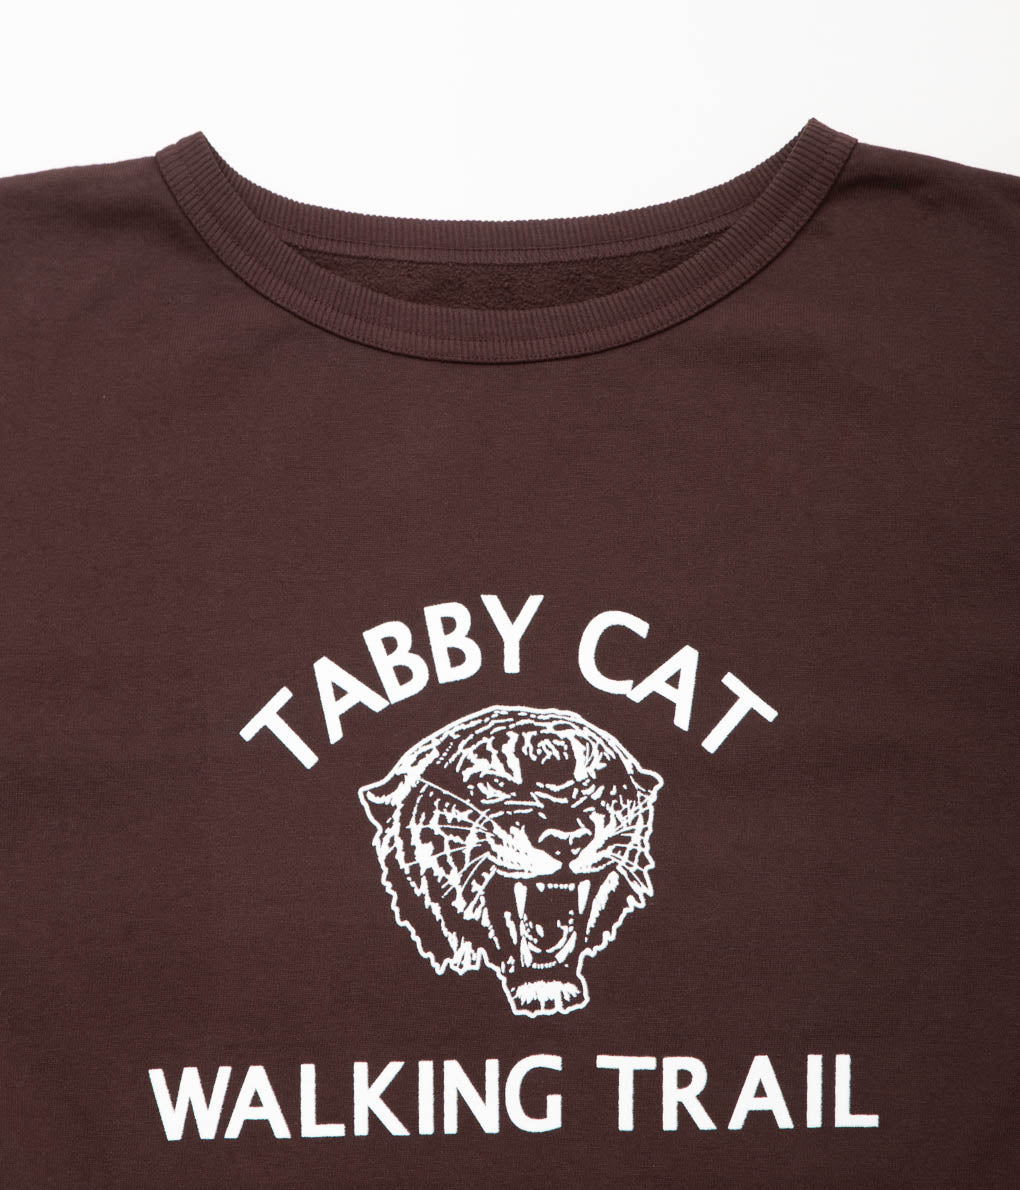 MIXTA "TABBY CAT" (DARK CHOCOLATE)